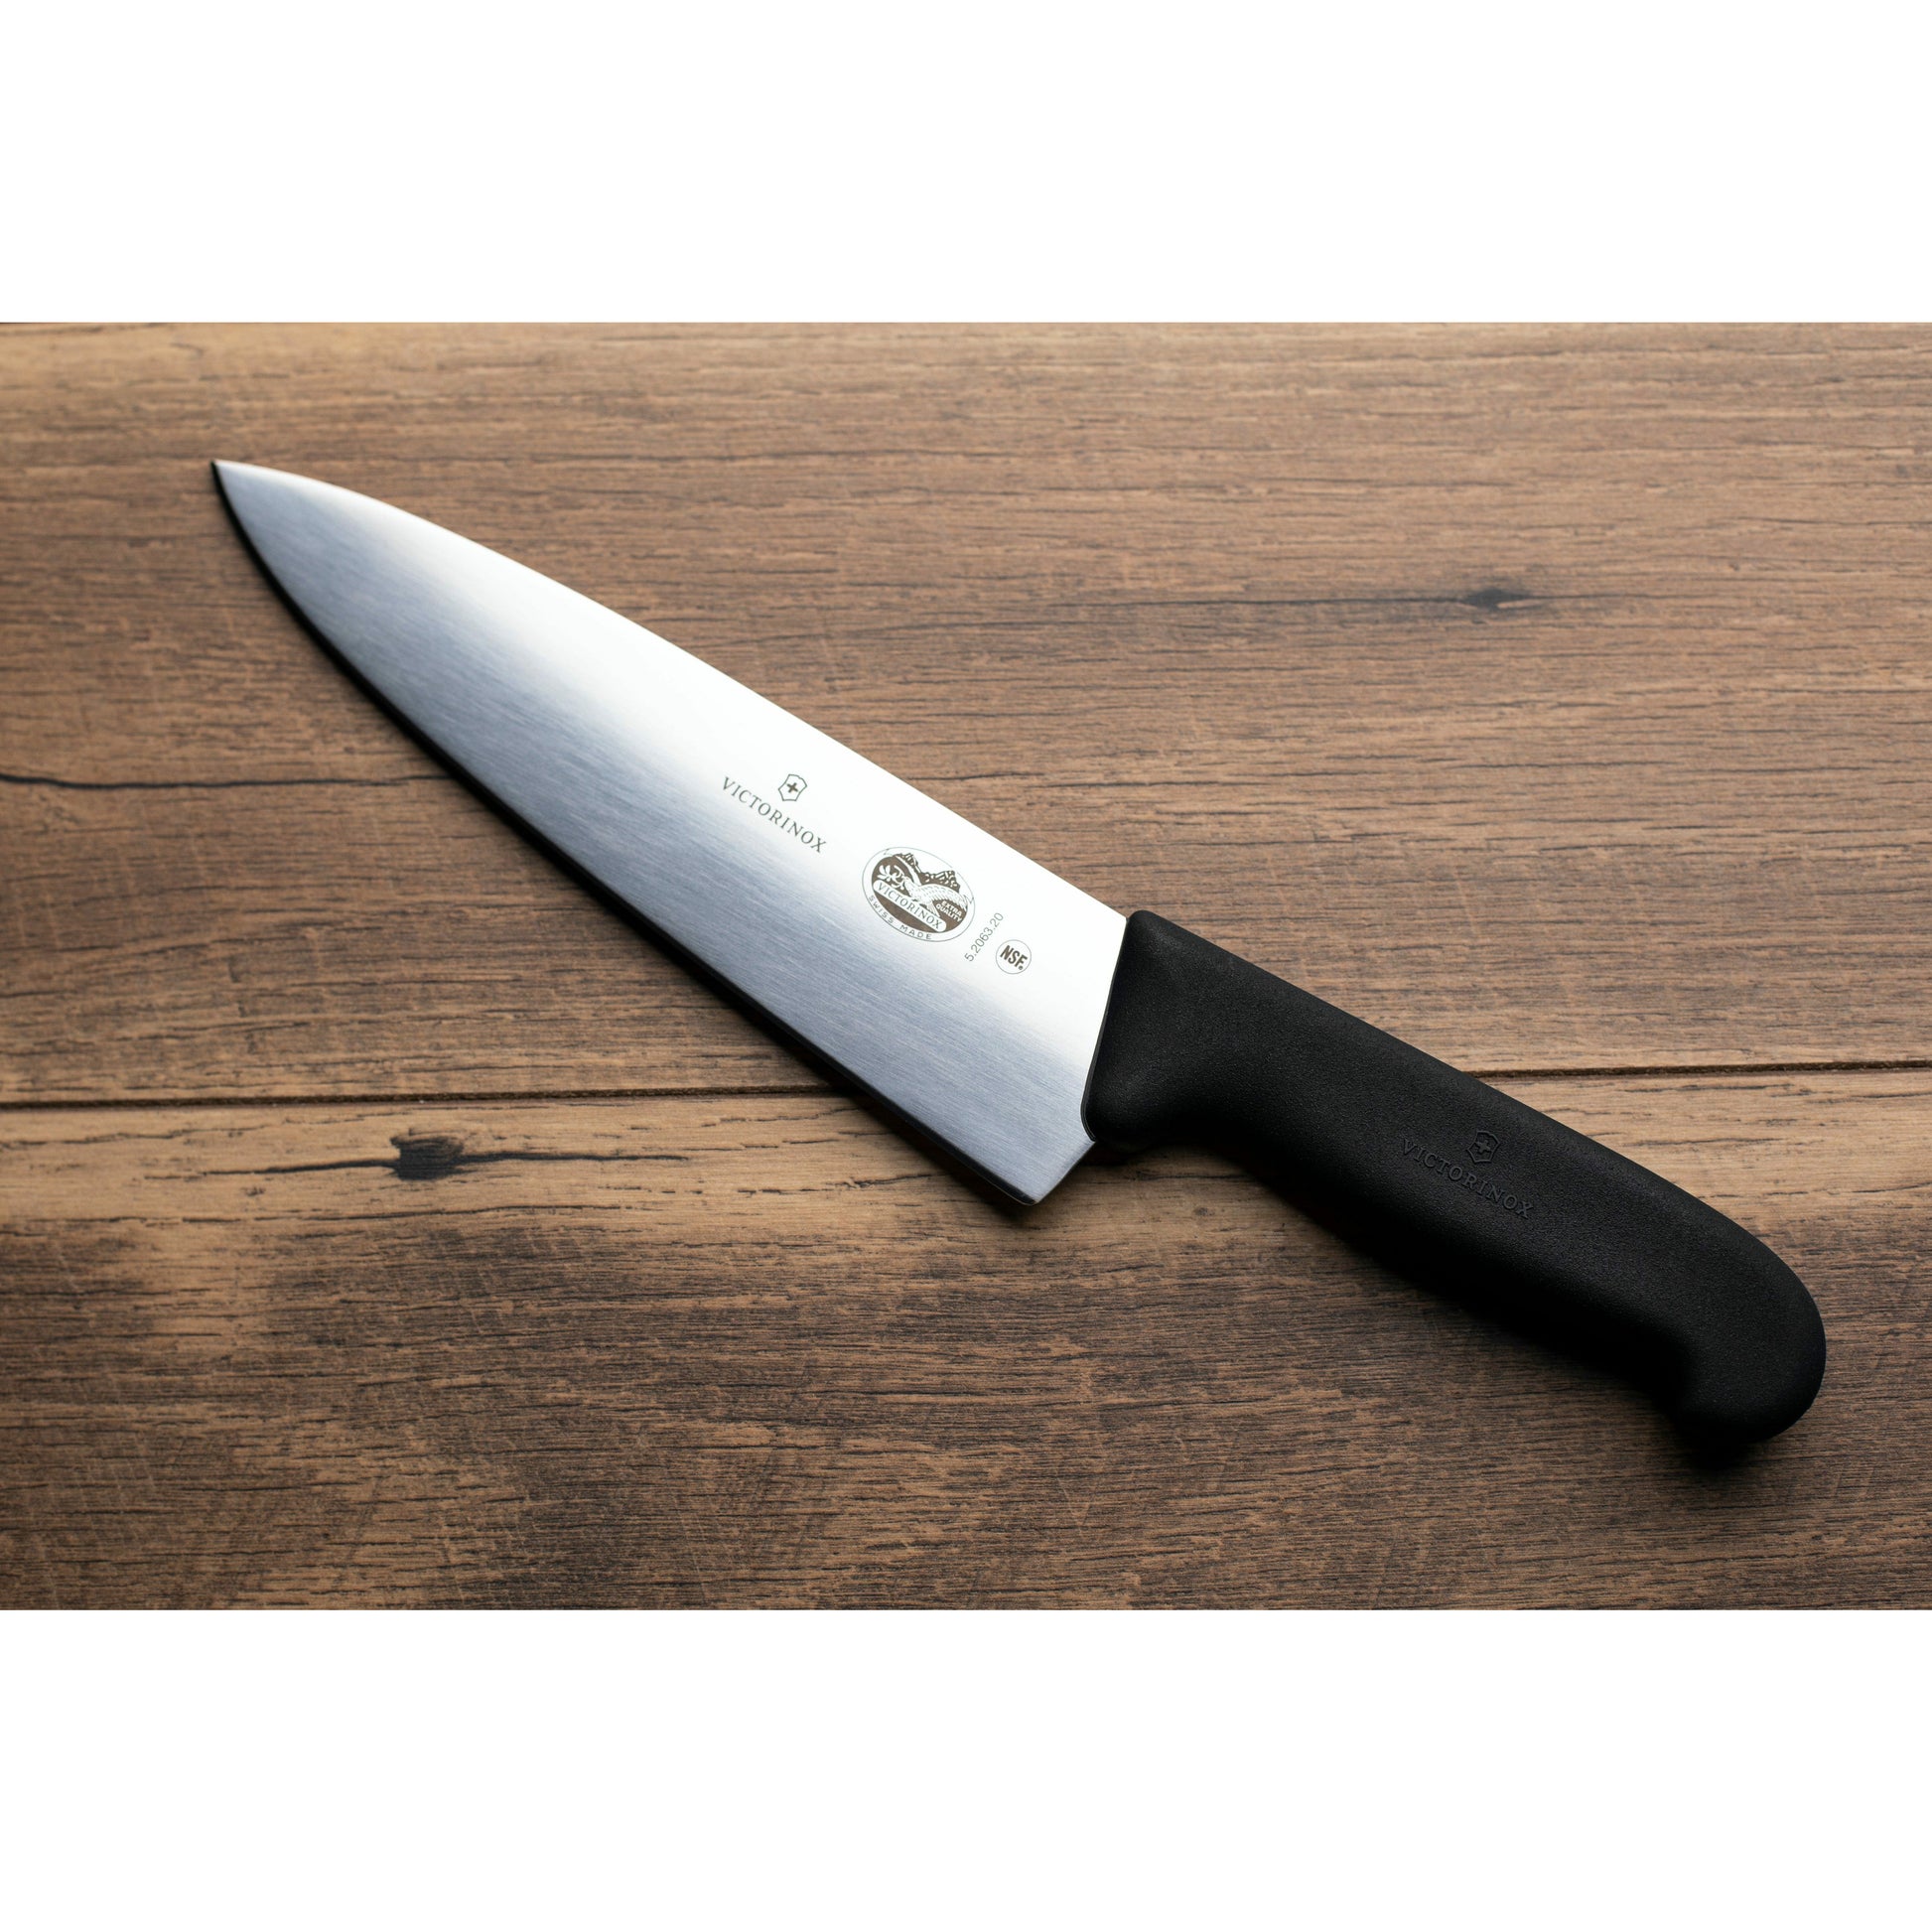 Victorinox Fibrox 8-Inch Chef's Knife - 40520, 47520, & 45520